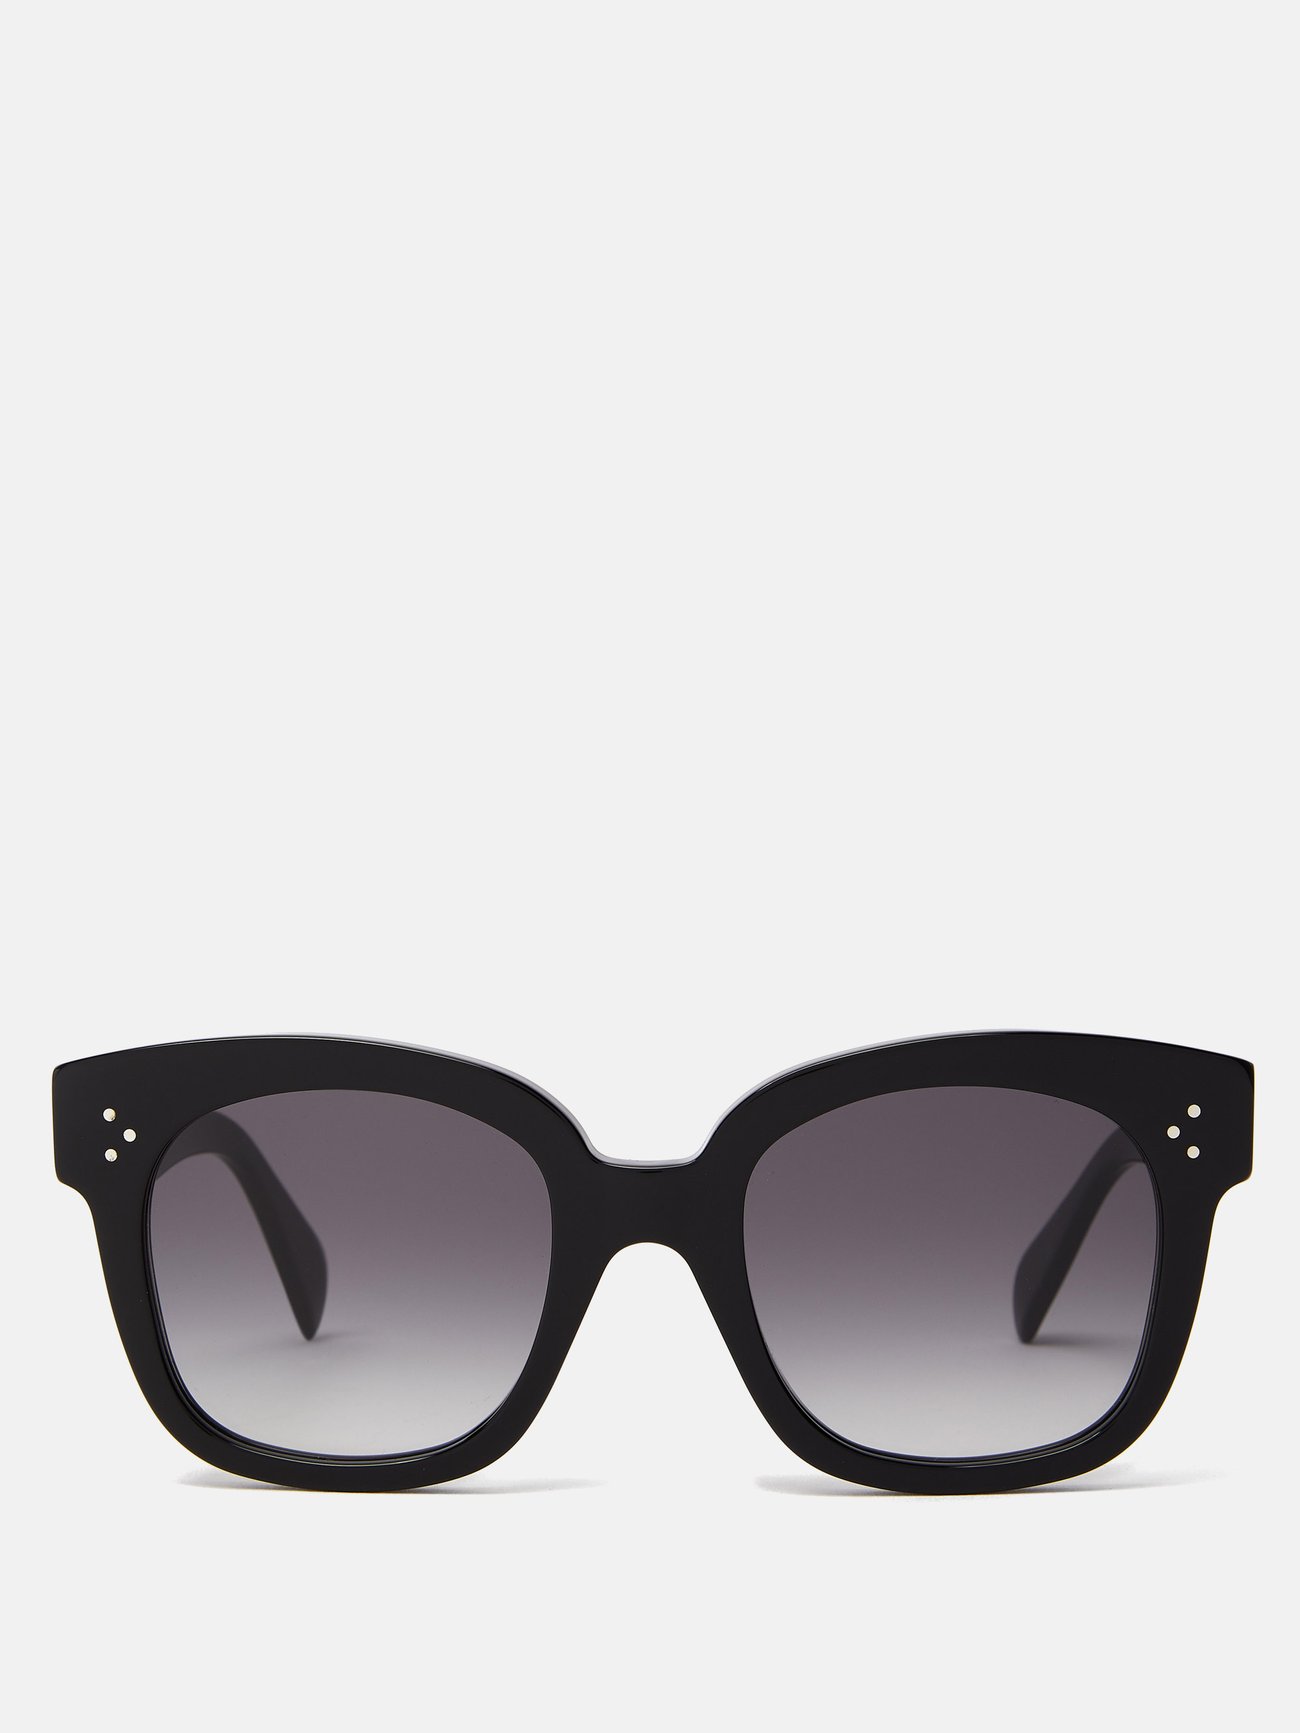 Celine Eyewear Celine Eyewear Square acetate sunglasses Black